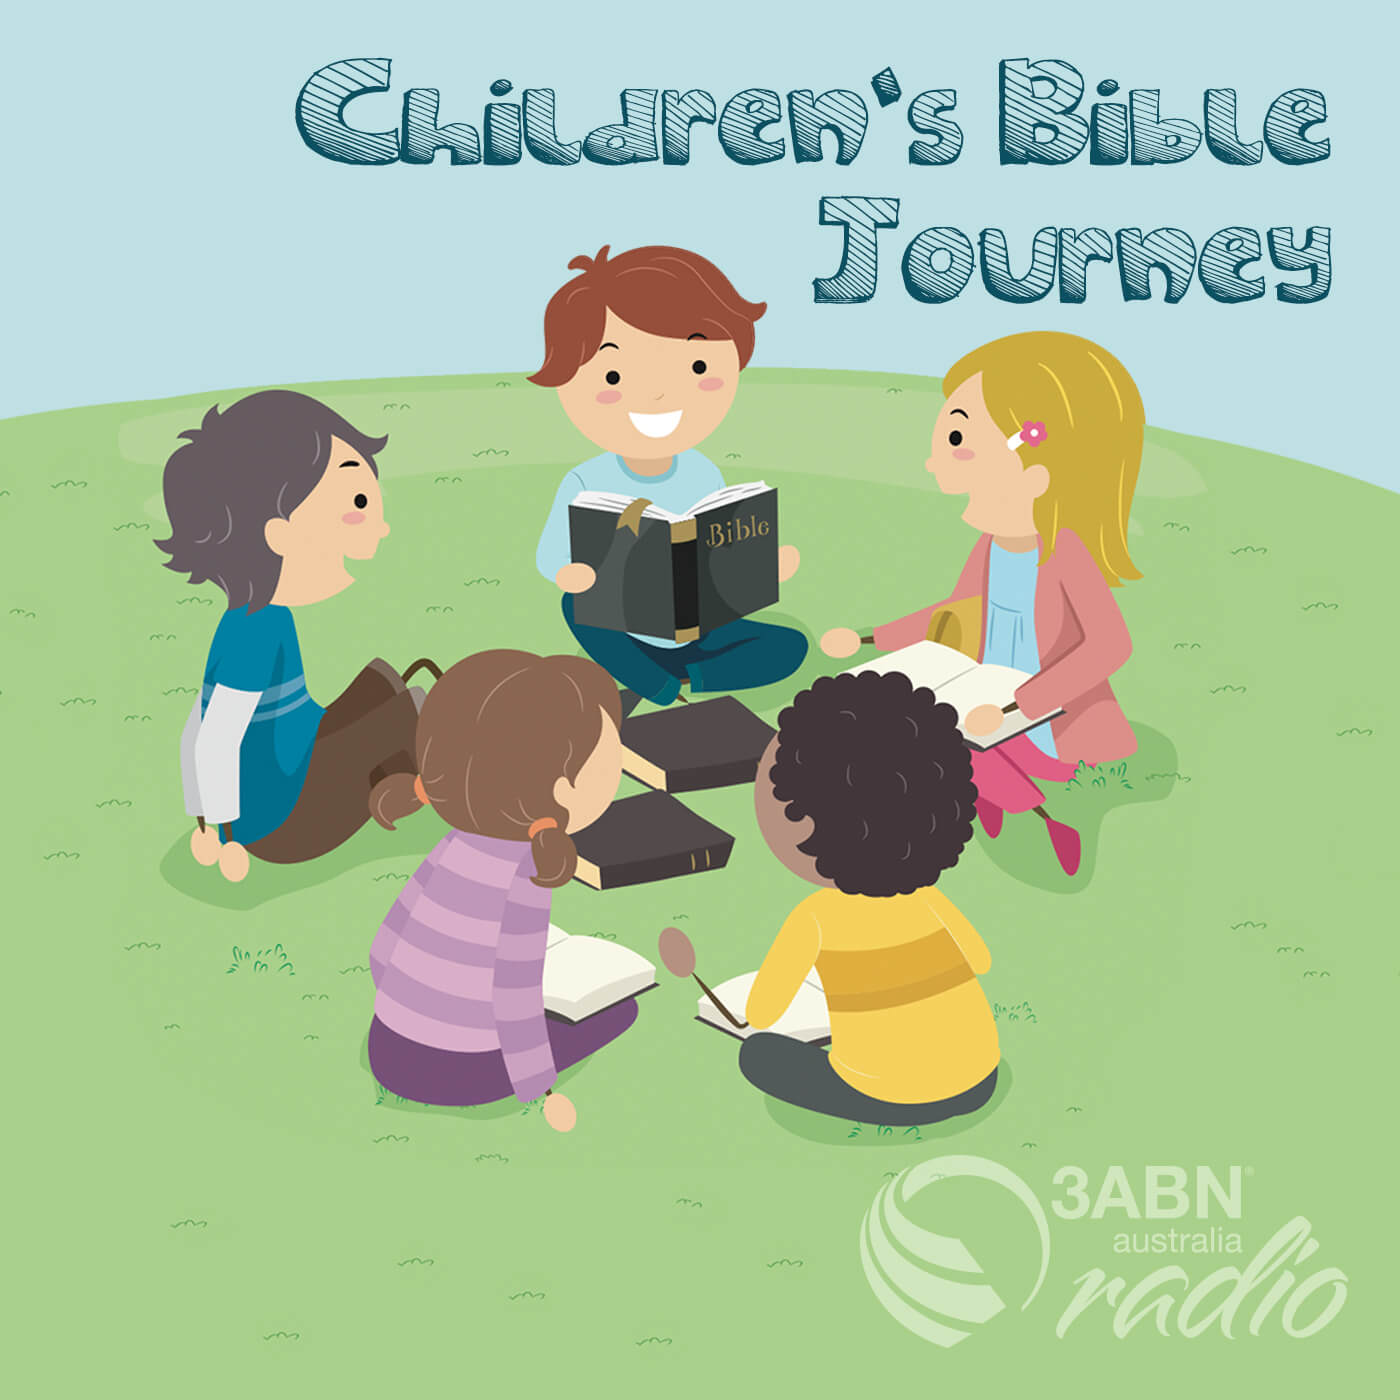 Children's Bible Journey - 2123